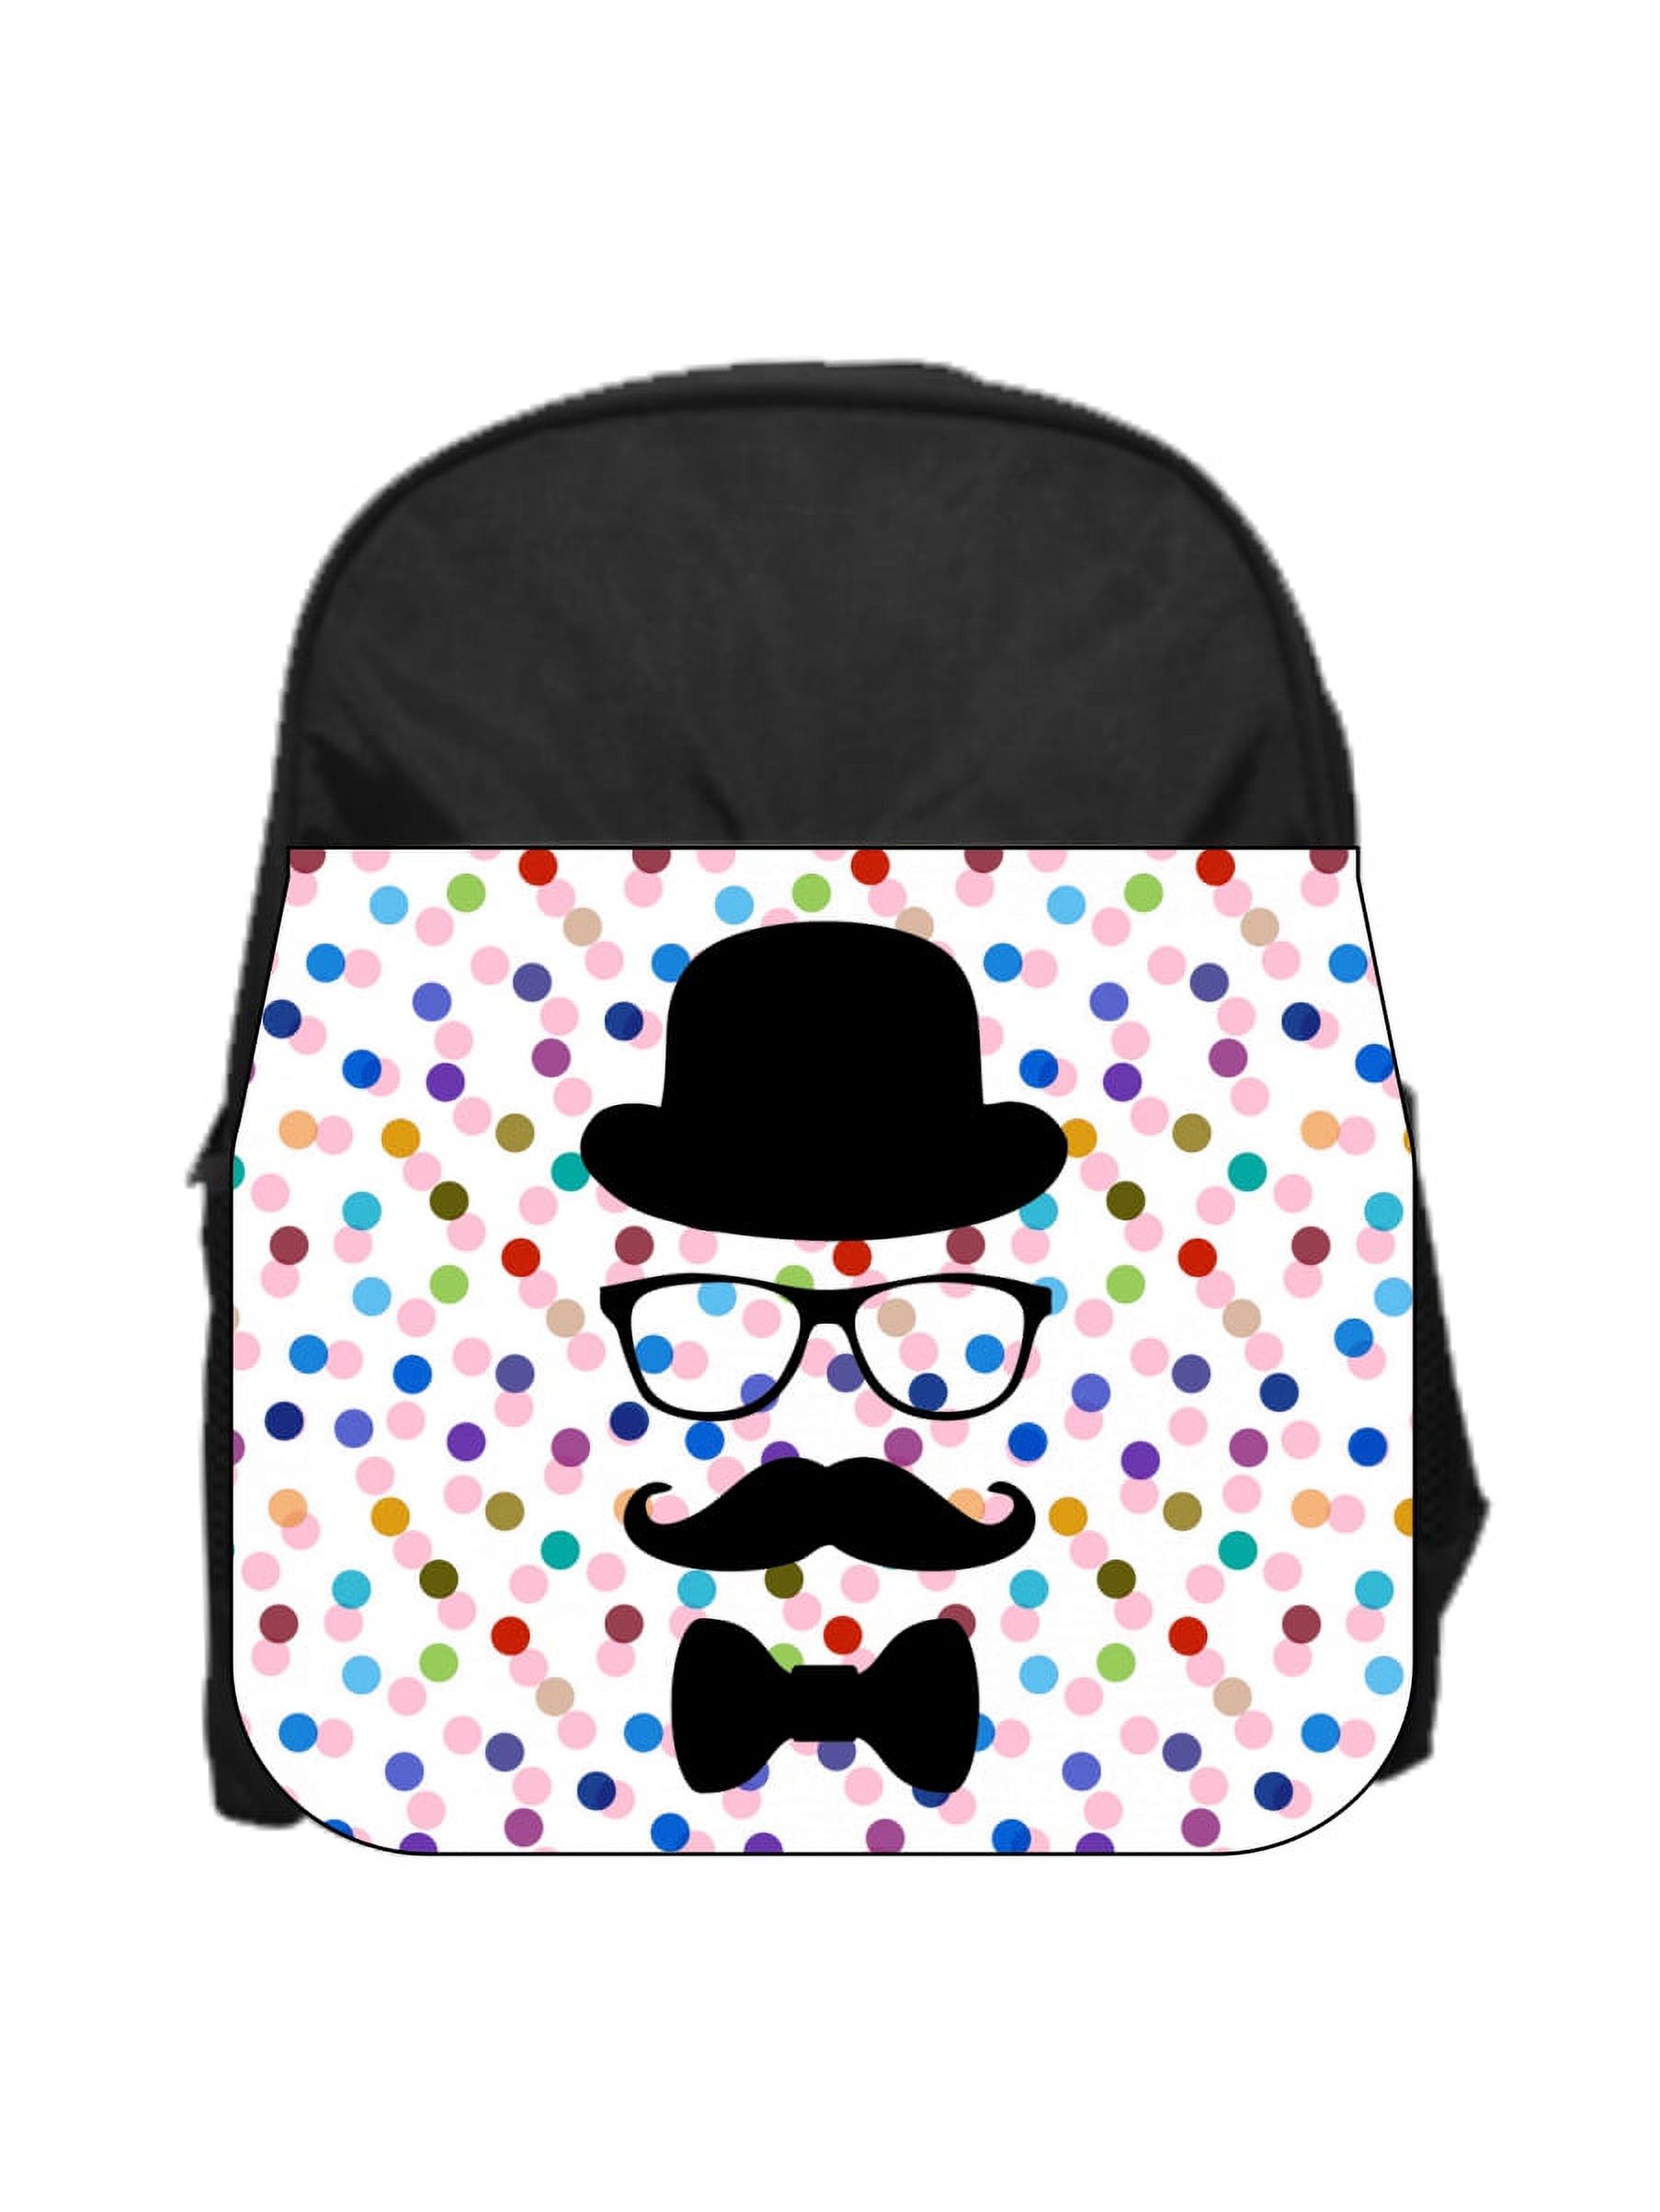 Hipster Elements on Polka Dots Pattern Print Design - 13" x 10" Black Preschool Toddler Children's Backpack - image 1 of 2